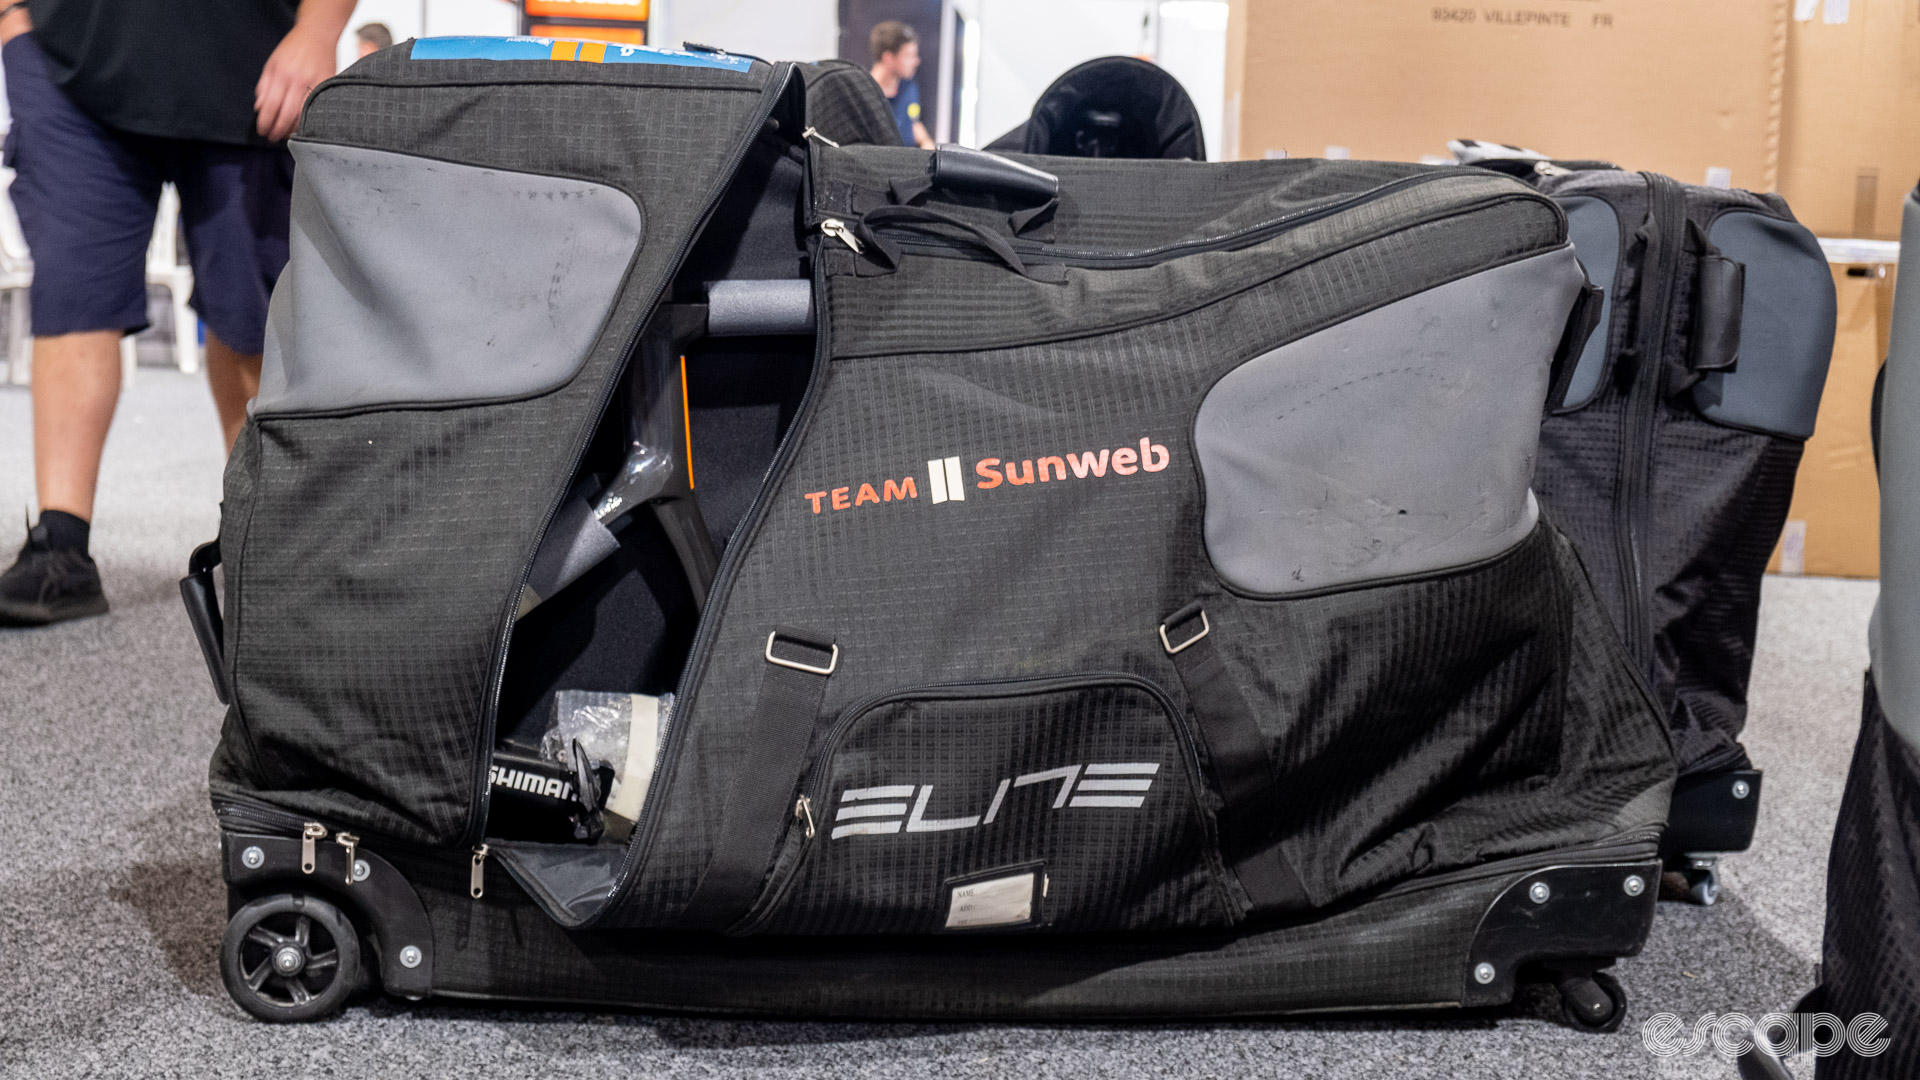 The photo shows a bike bag with a Team Sunweb logo on the side. 